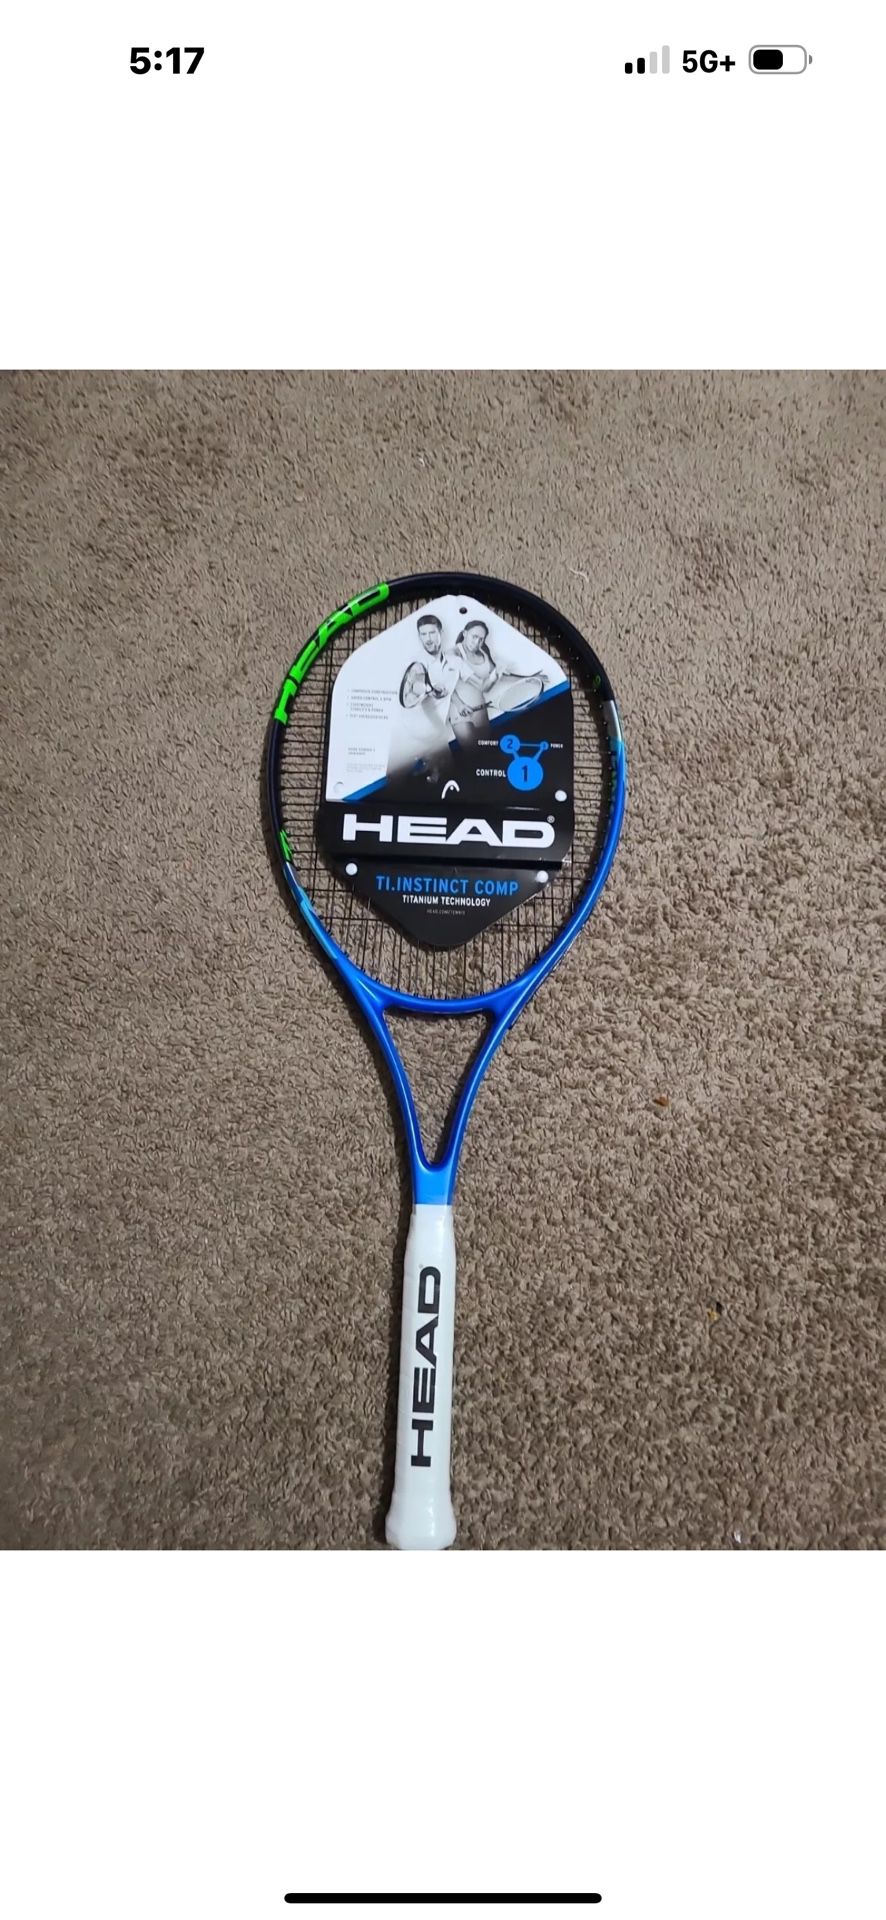 HEAD - Ti. Instinct Comp - Pre-Strung Tennis Racket - Grip Size 4 1/4-2 